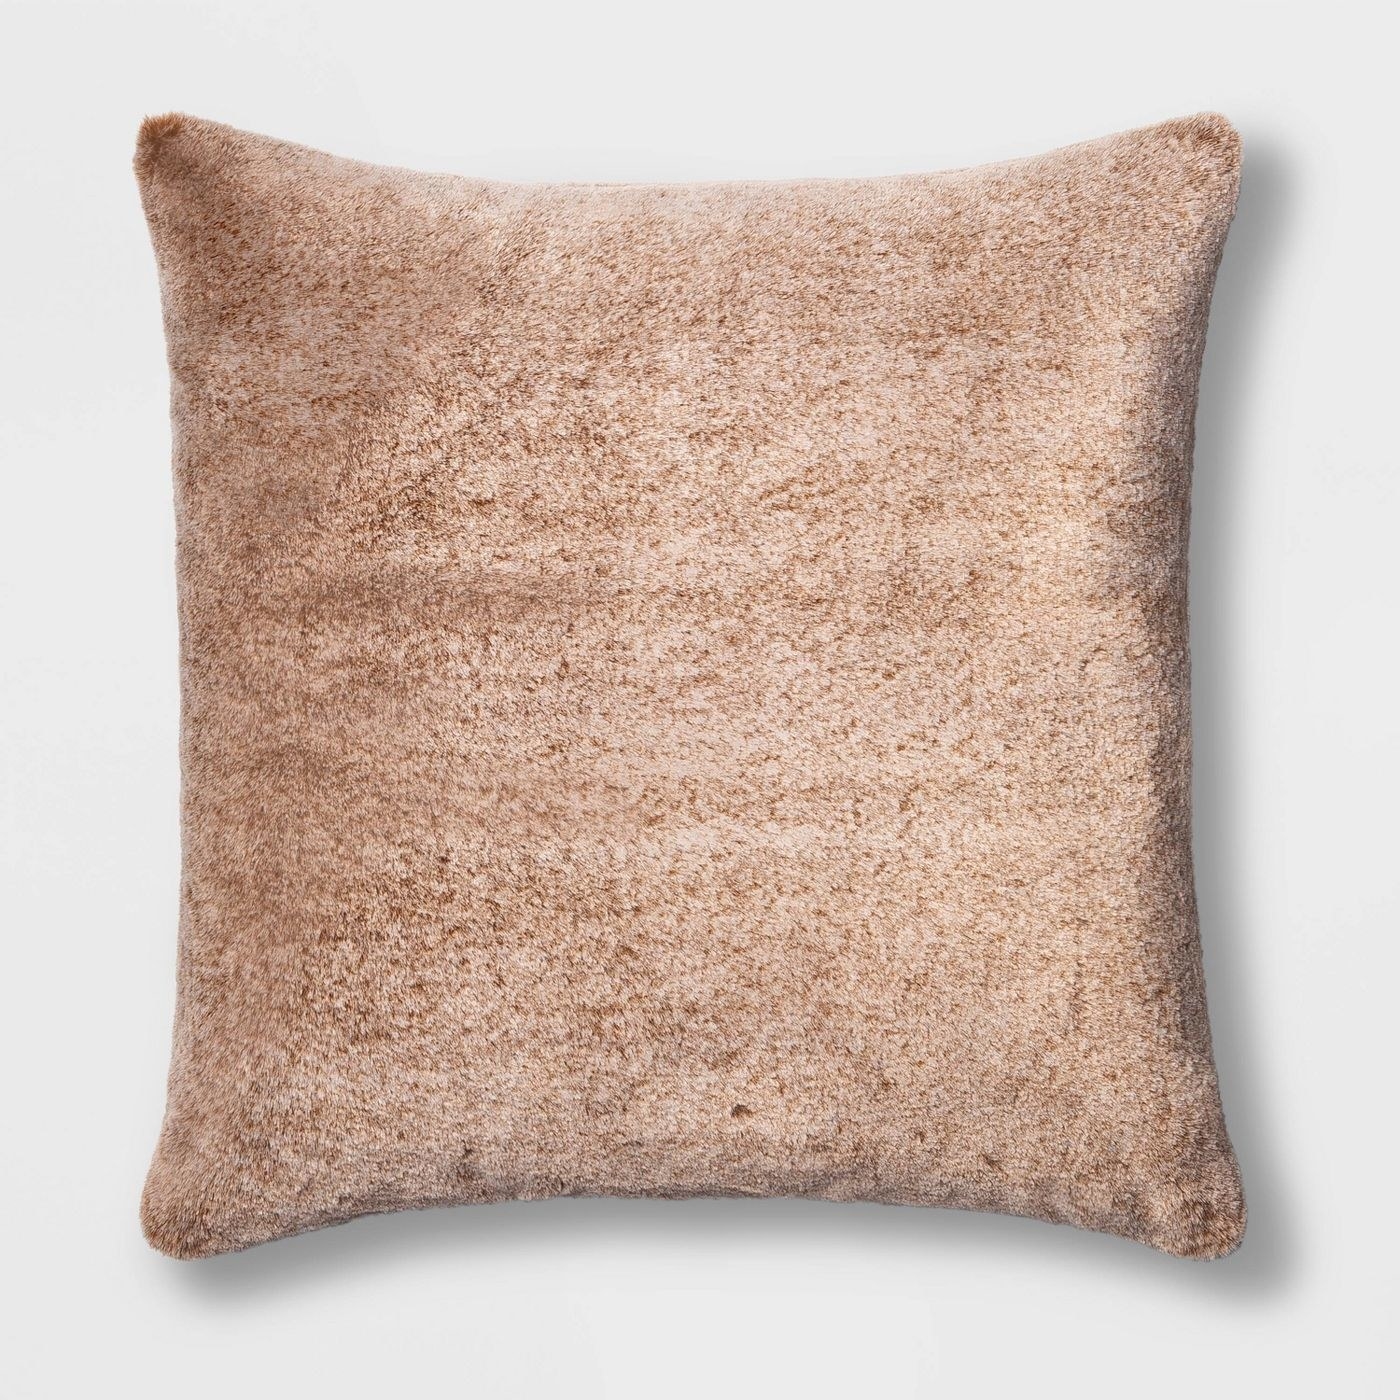 The brown faux fur pillow 